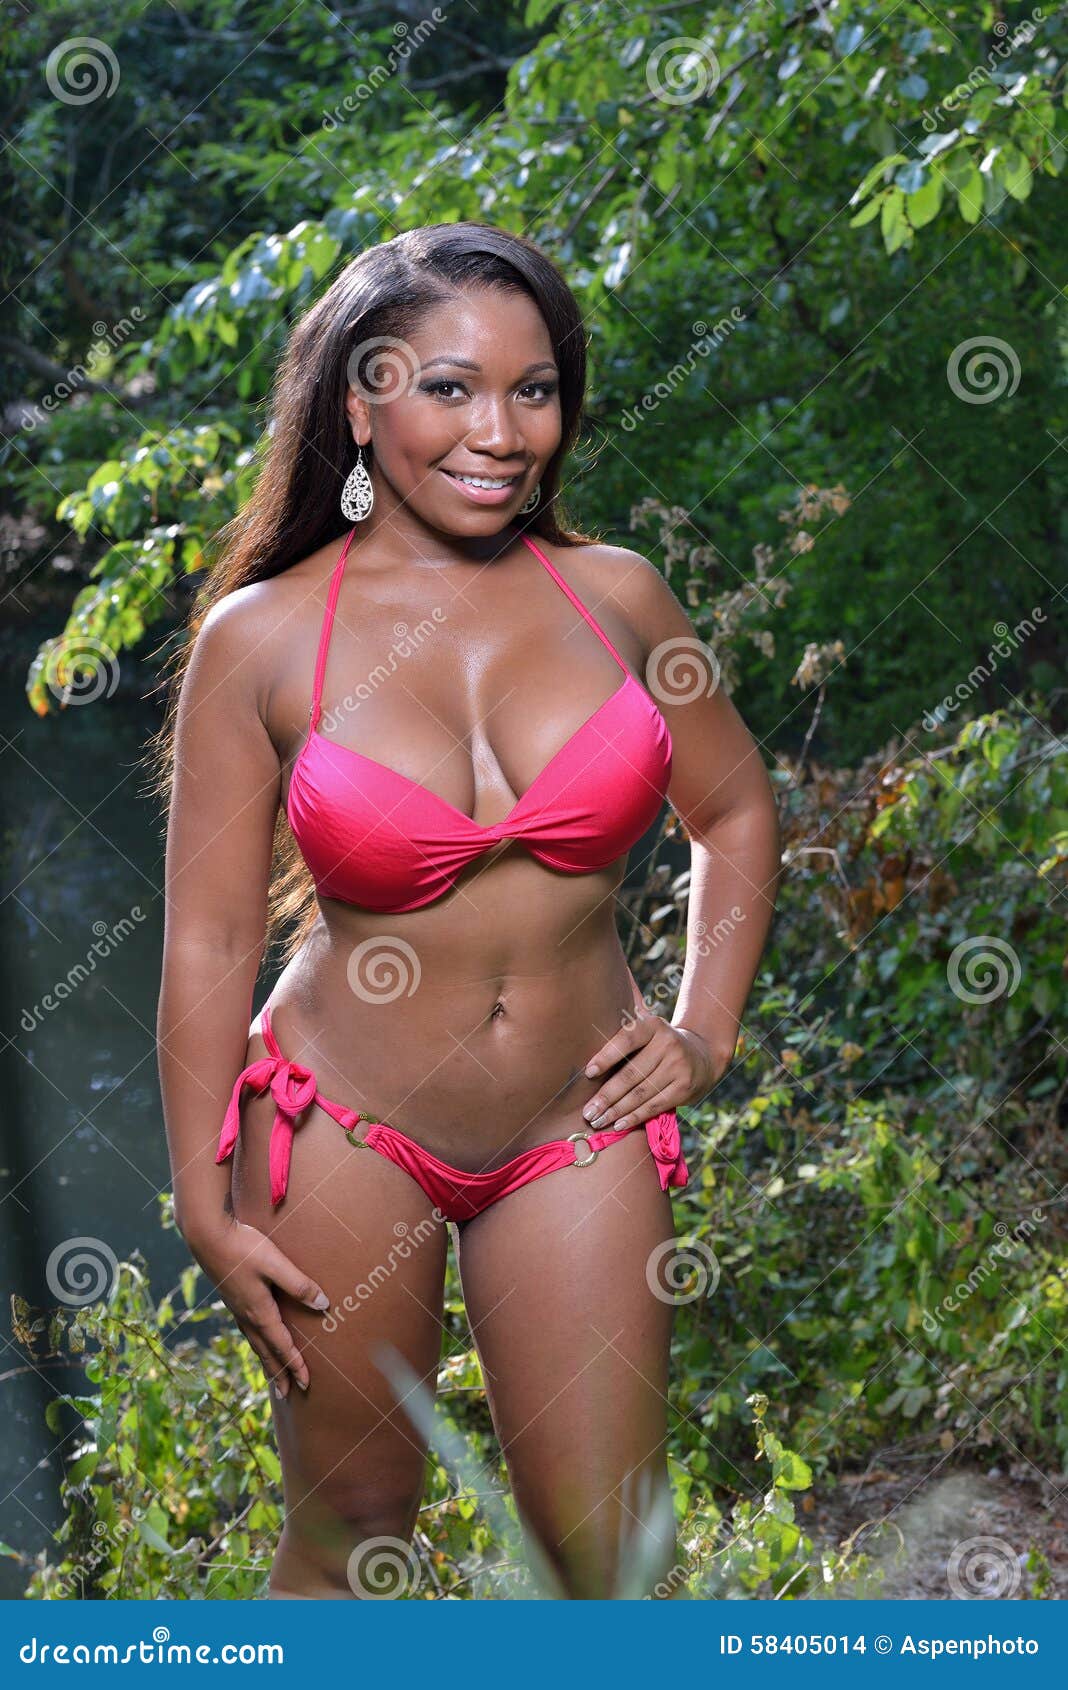 arnie parker recommends Black Females In Bikinis